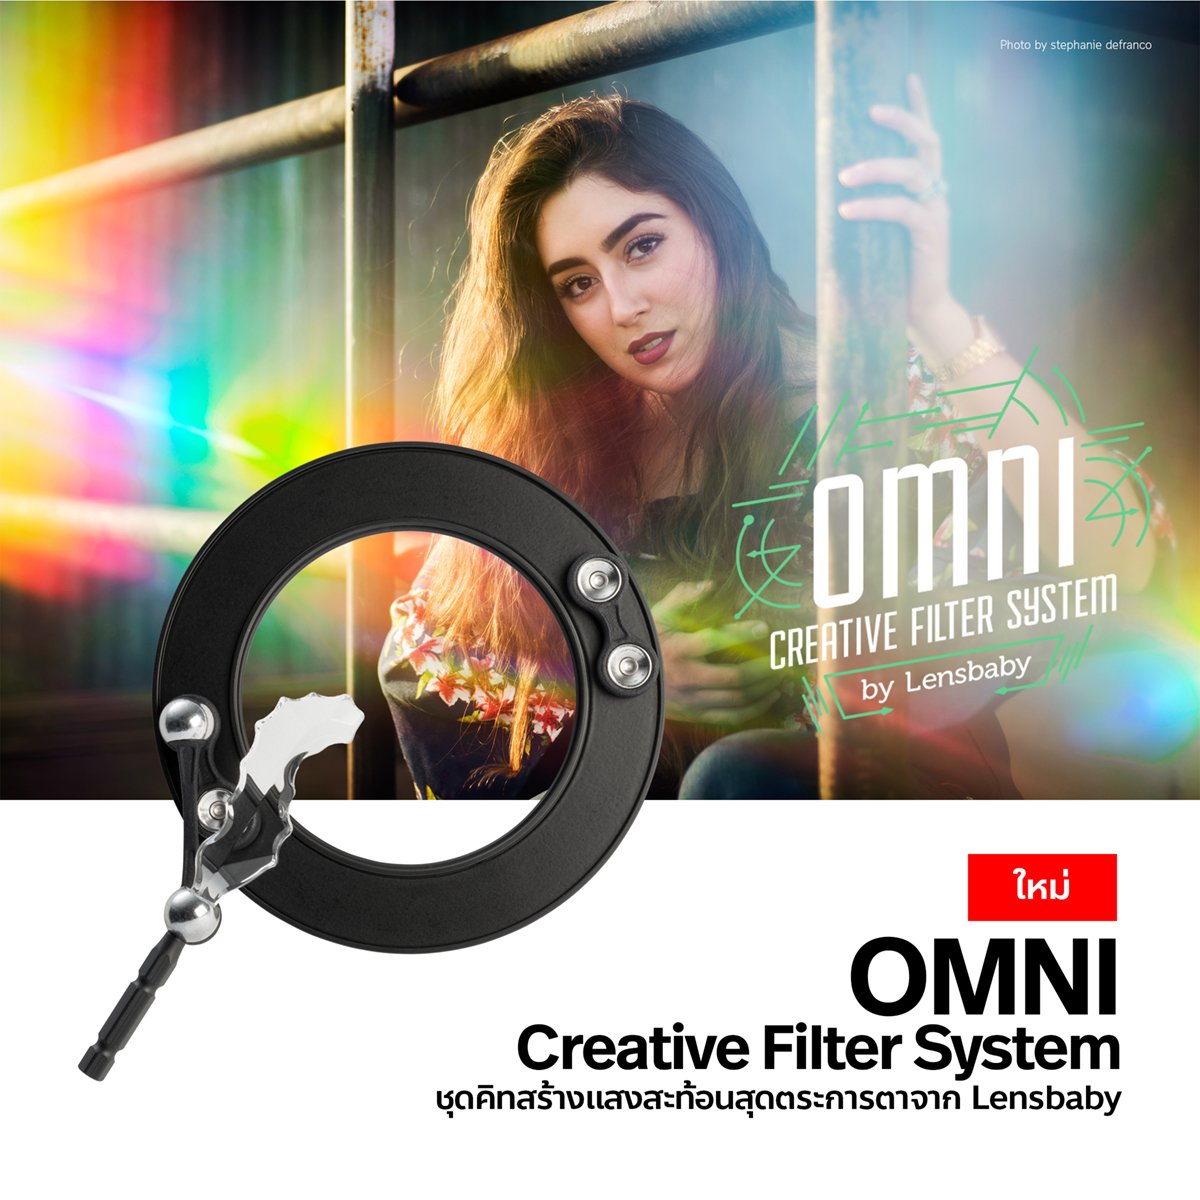 woensdag Glimlach Viool Lensbaby OMNI Creative Filter System - quickmarketing